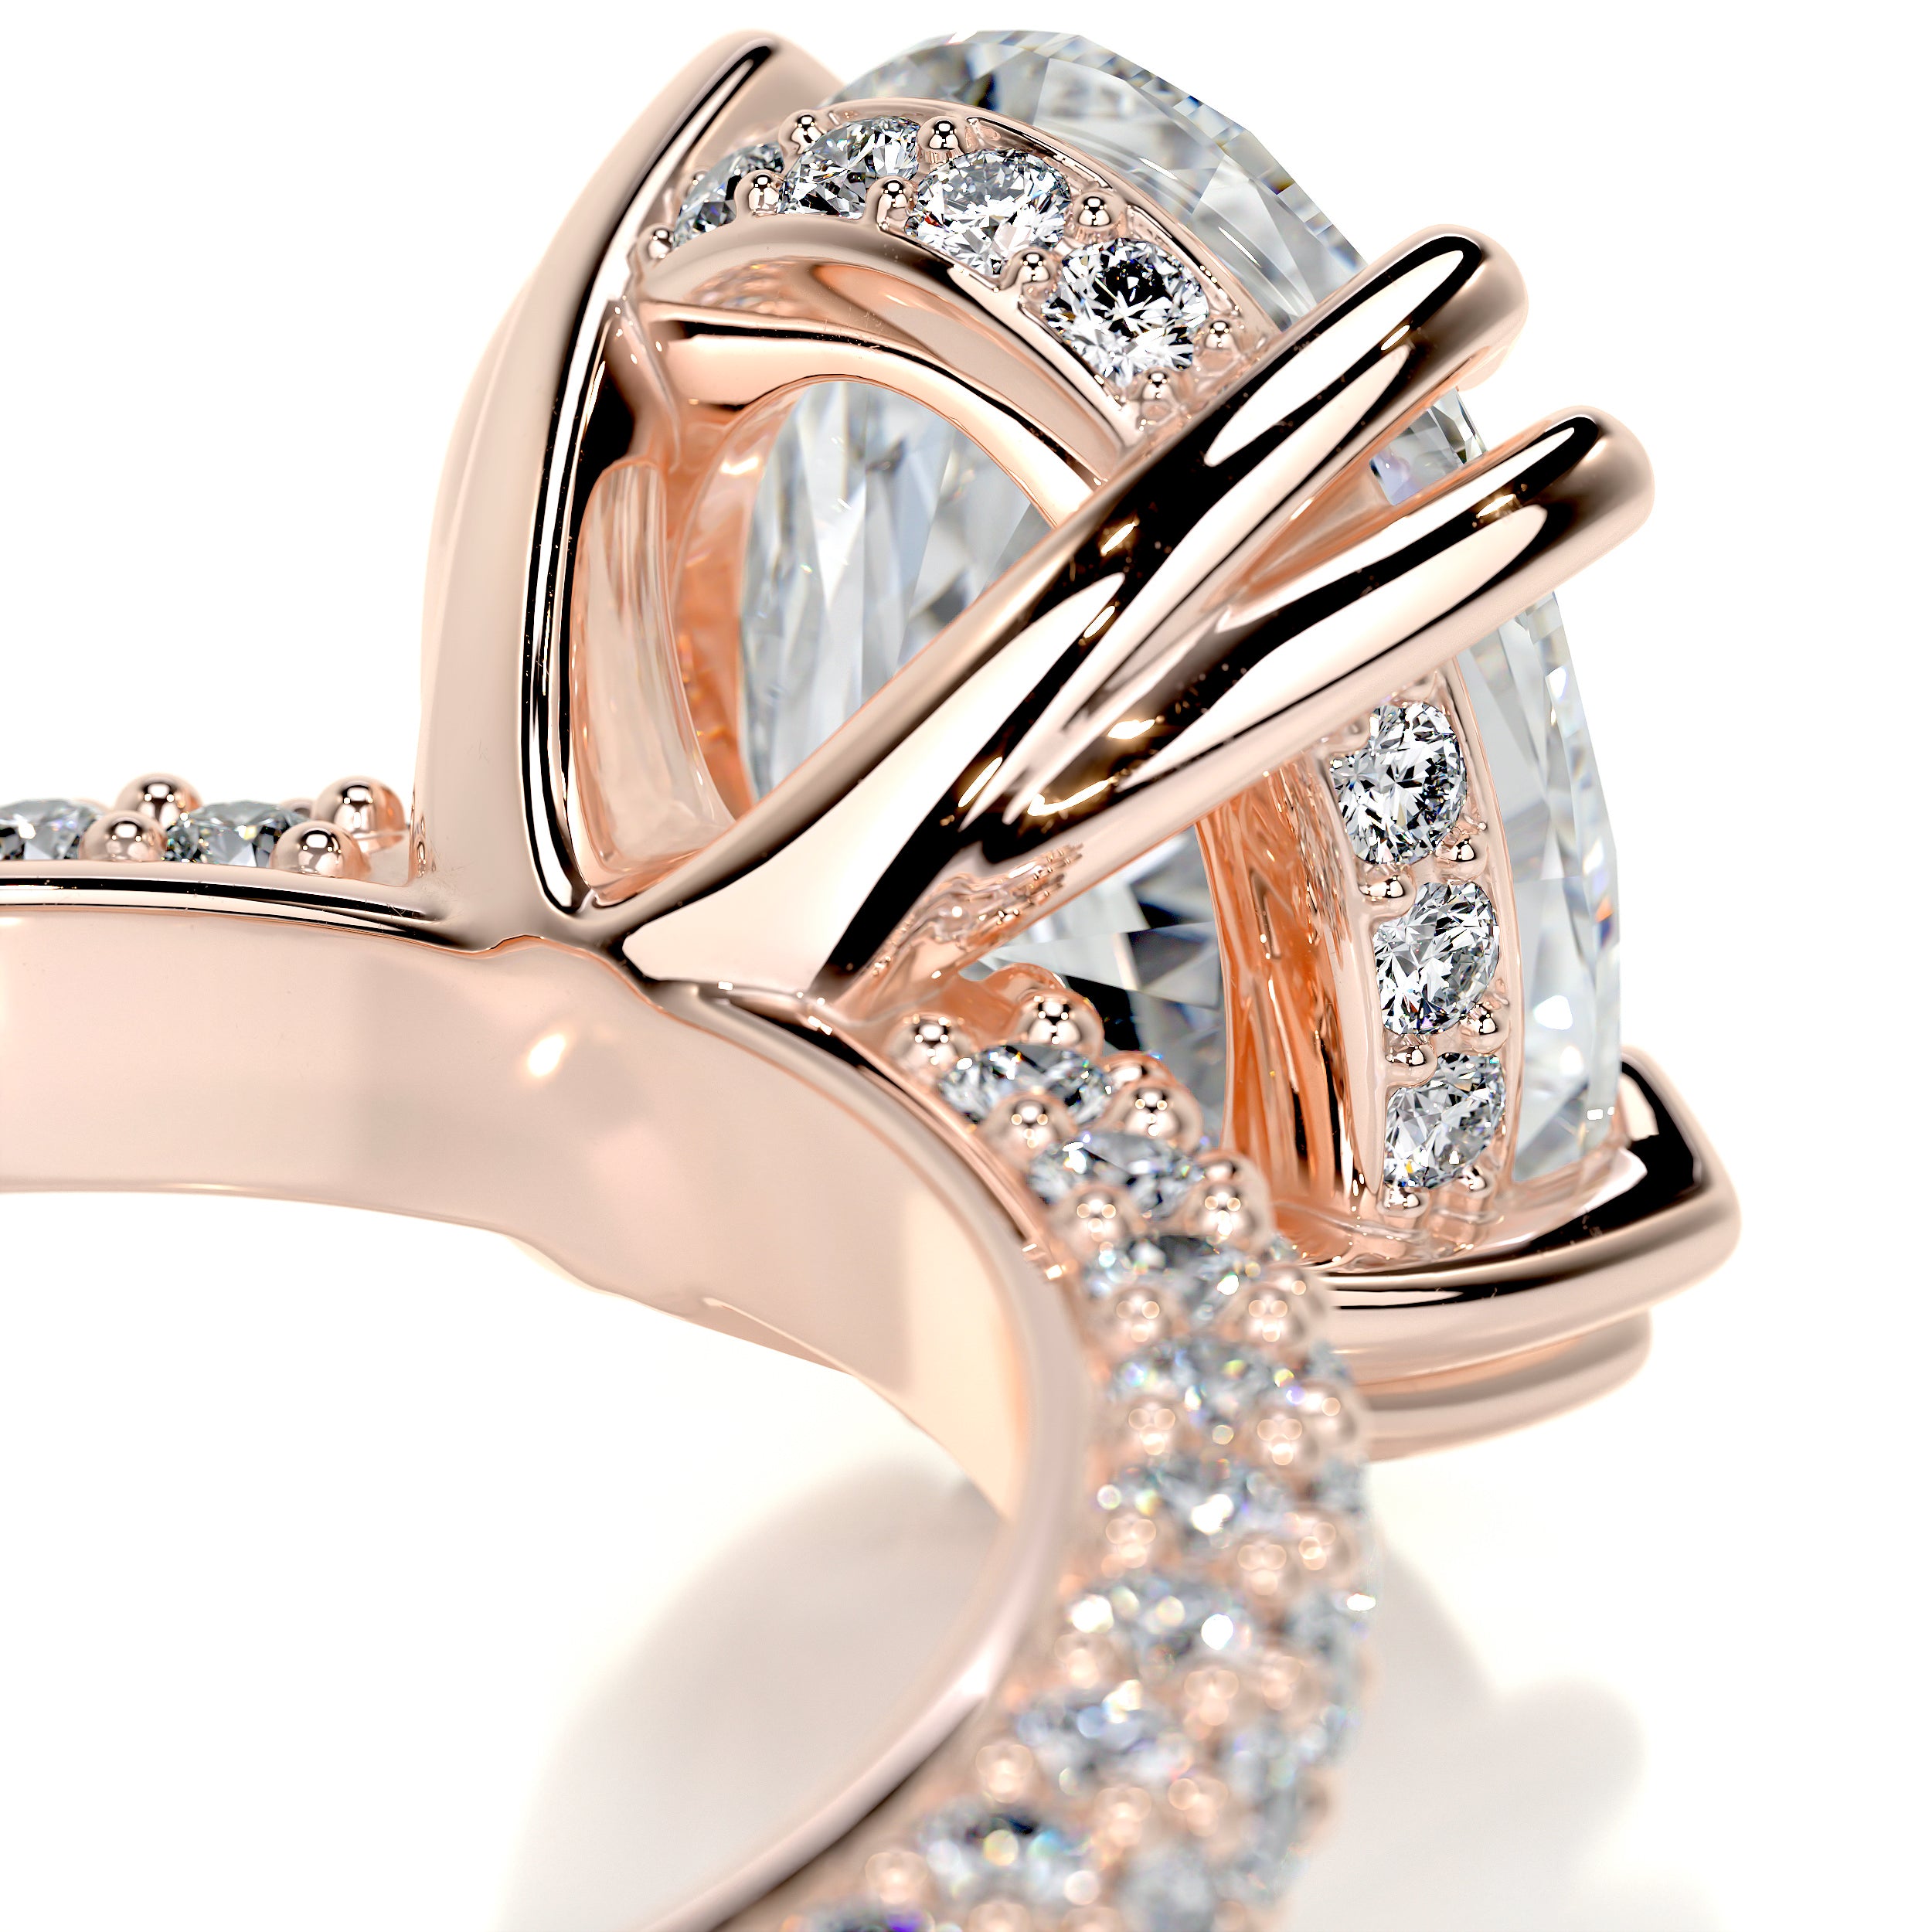 Kelly Diamond Engagement Ring -14K Rose Gold